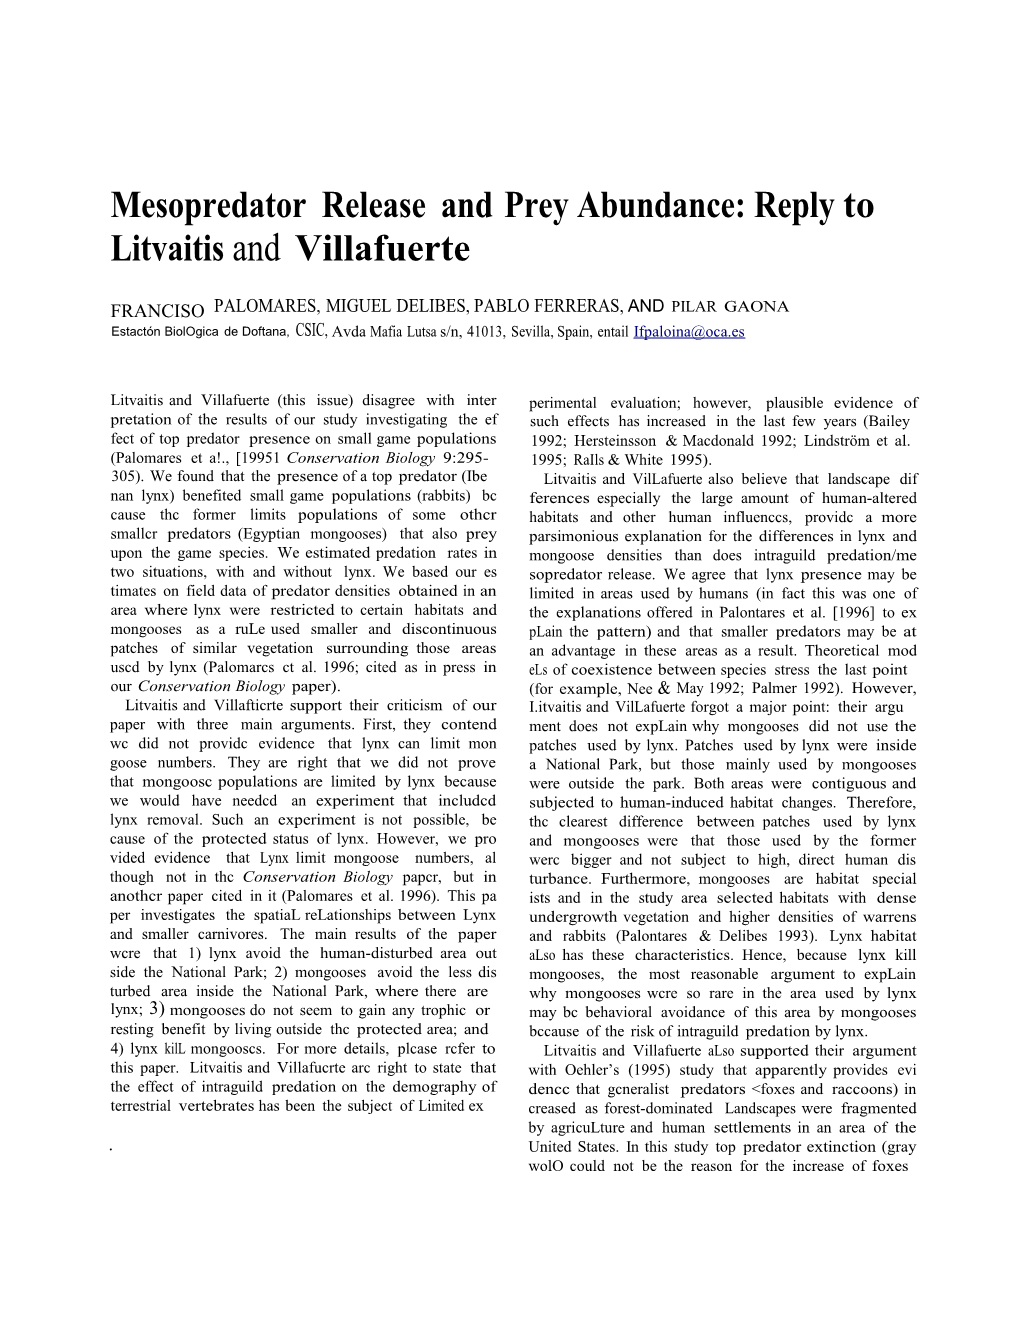 Mesopredator Release and Prey Abundance: Reply To